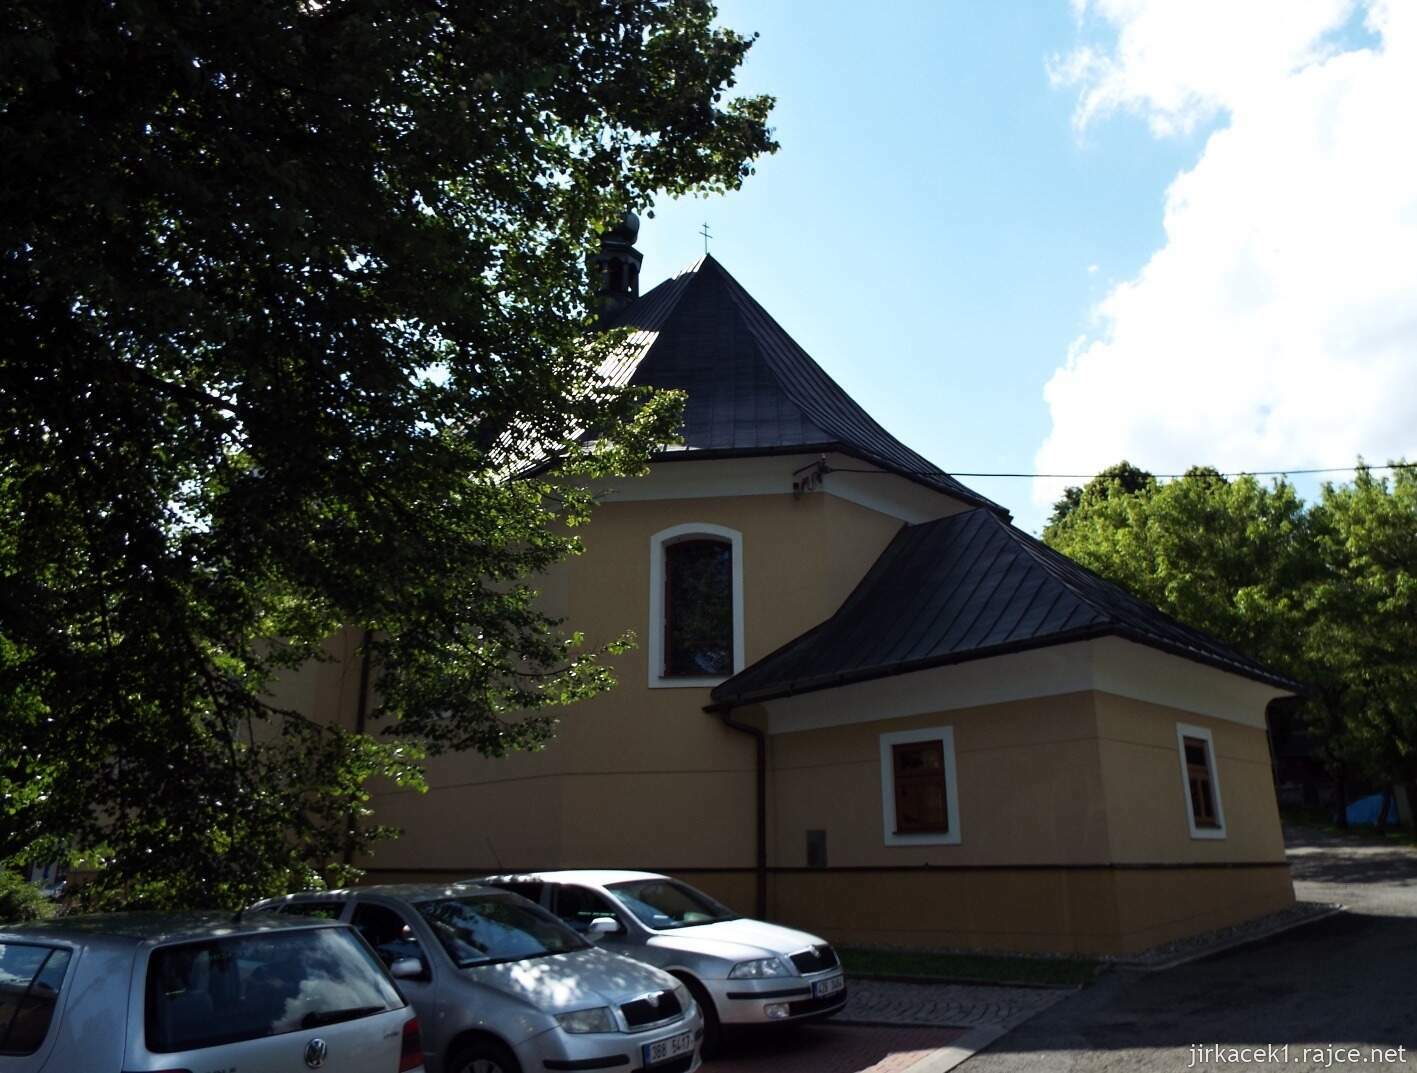 017 - Nový Hrozenkov - kostel sv. Jana Křtitele 16 - presbytář